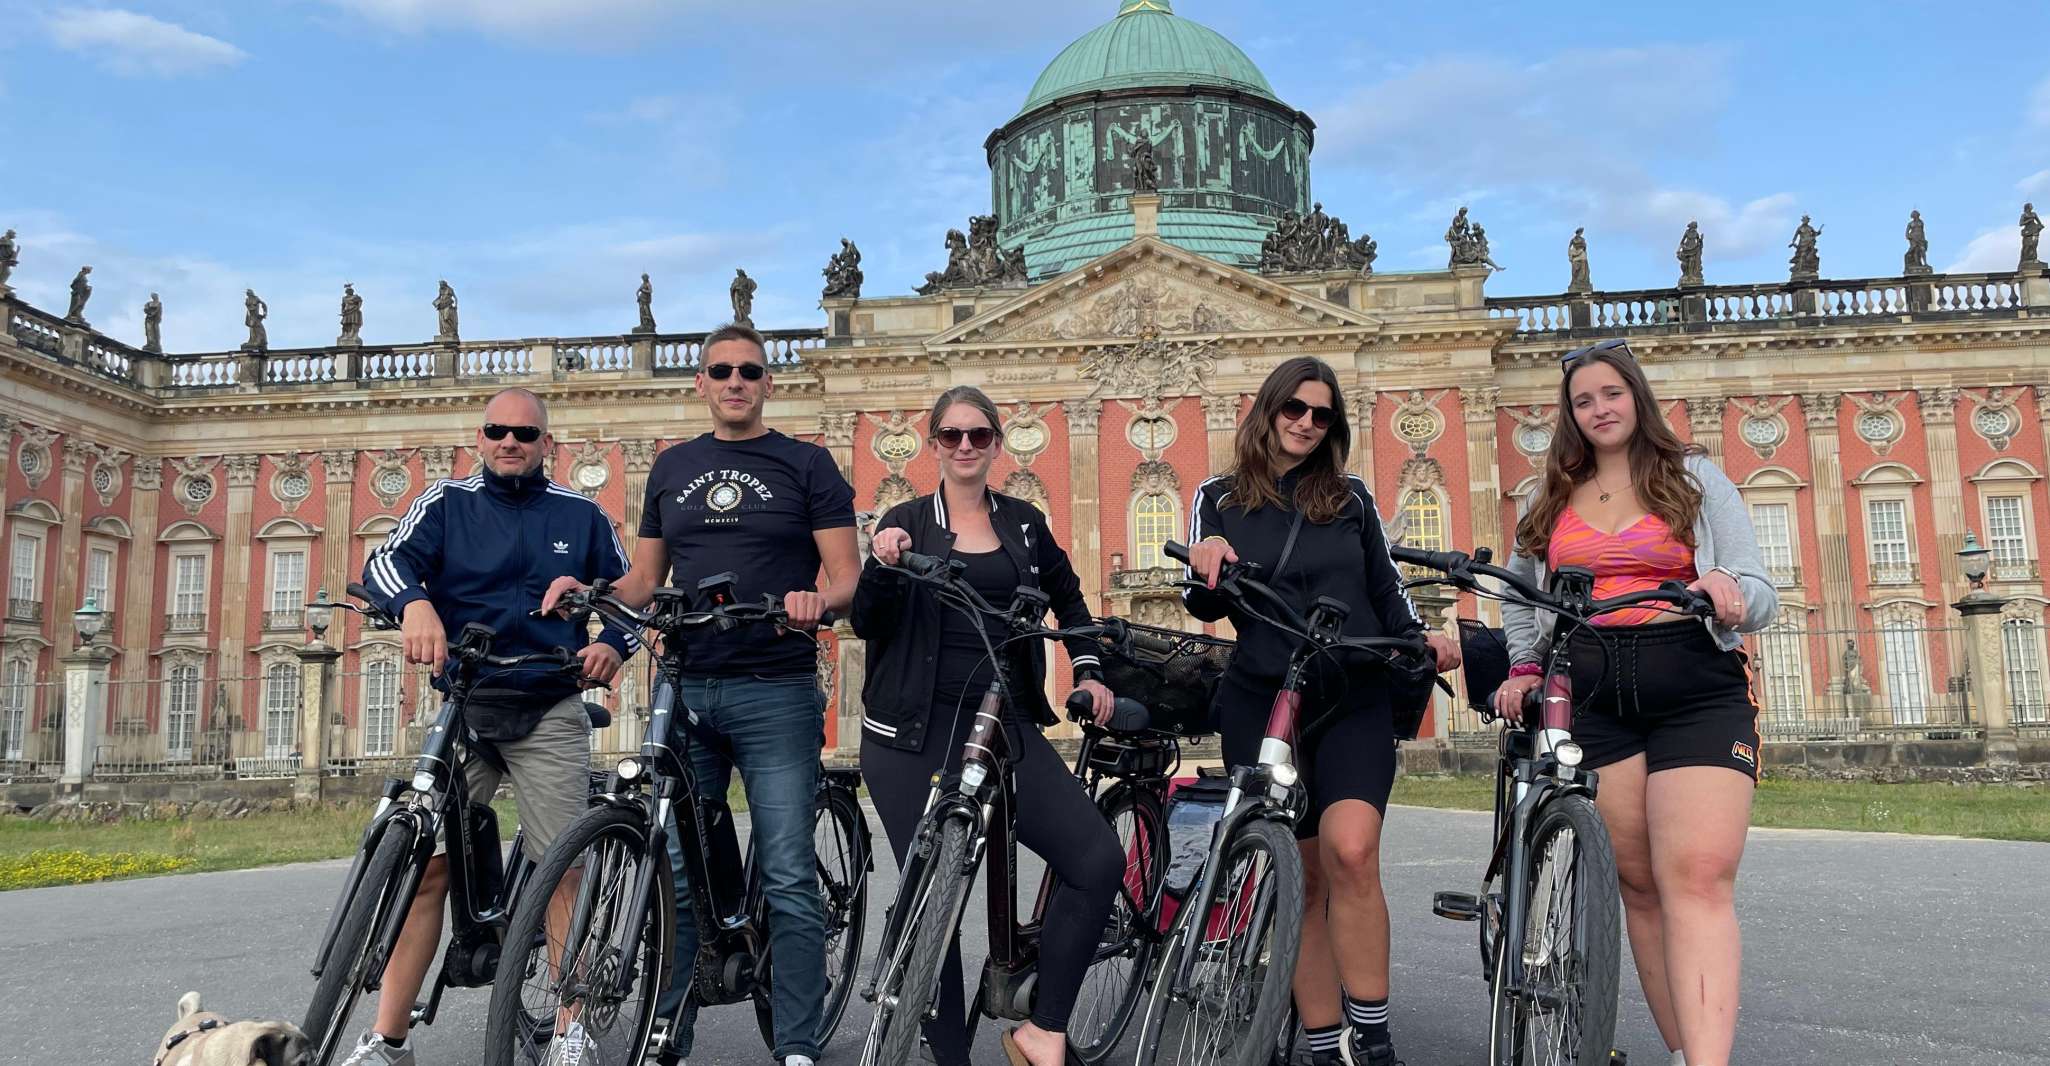 From Potsdam, E-bike tour into the vineyards - Housity